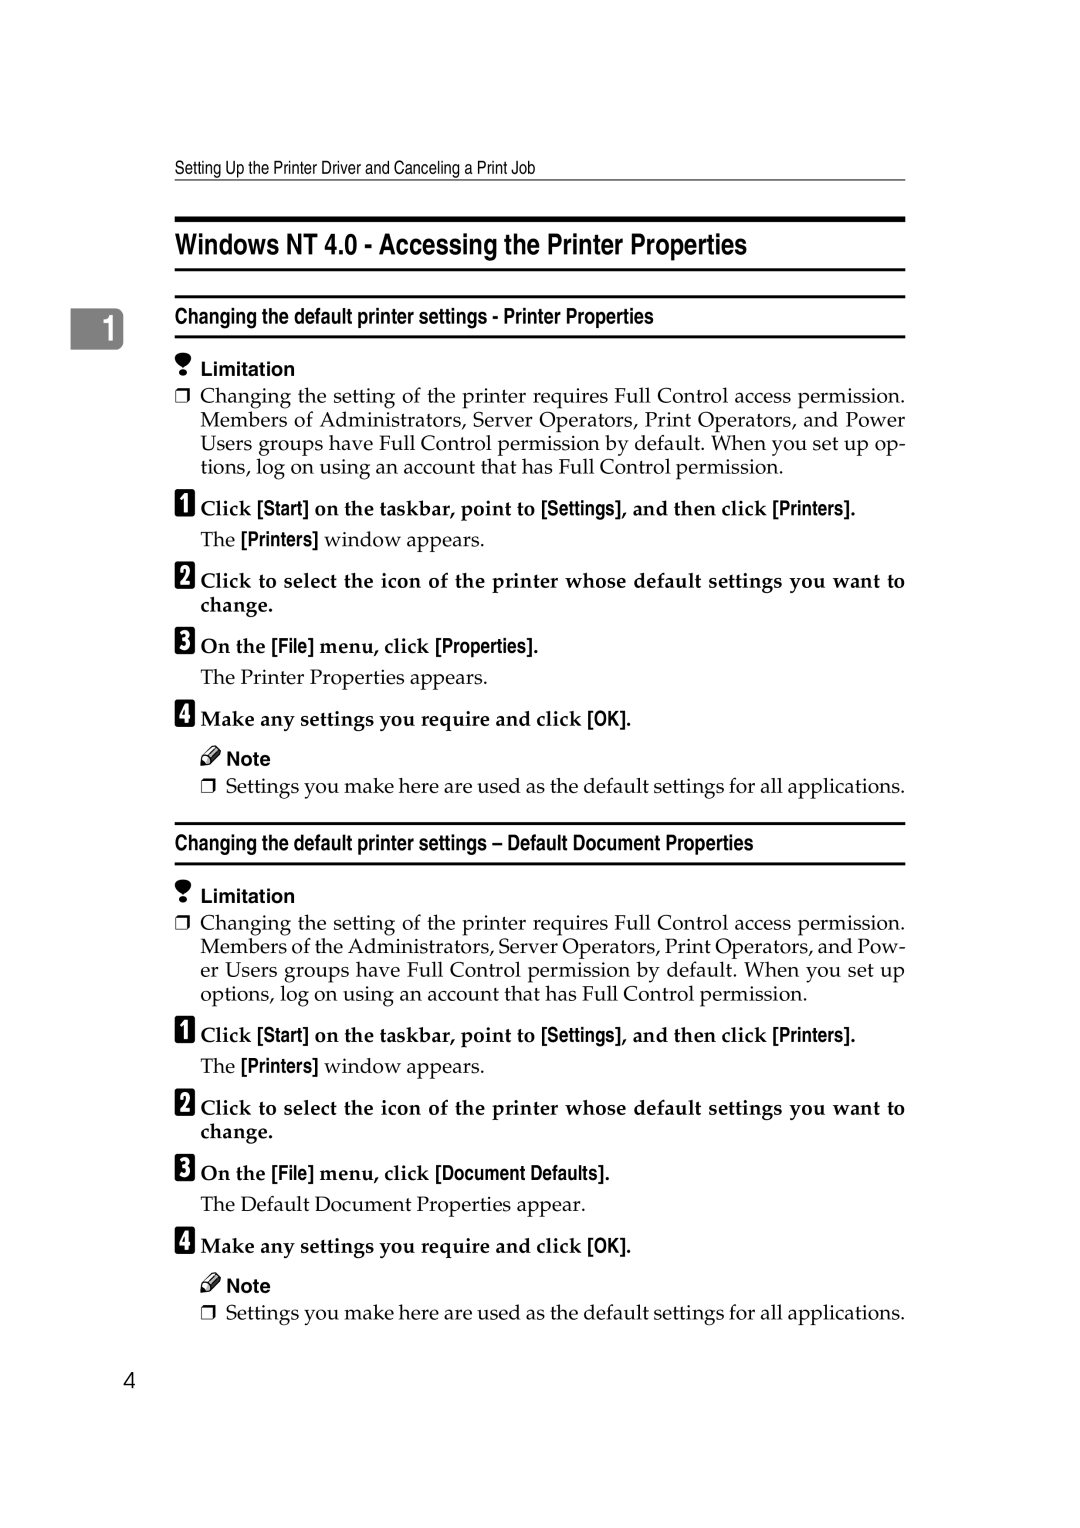 Lanier AP2610 manual Windows NT 4.0 Accessing the Printer Properties, On the File menu, click Document Defaults 